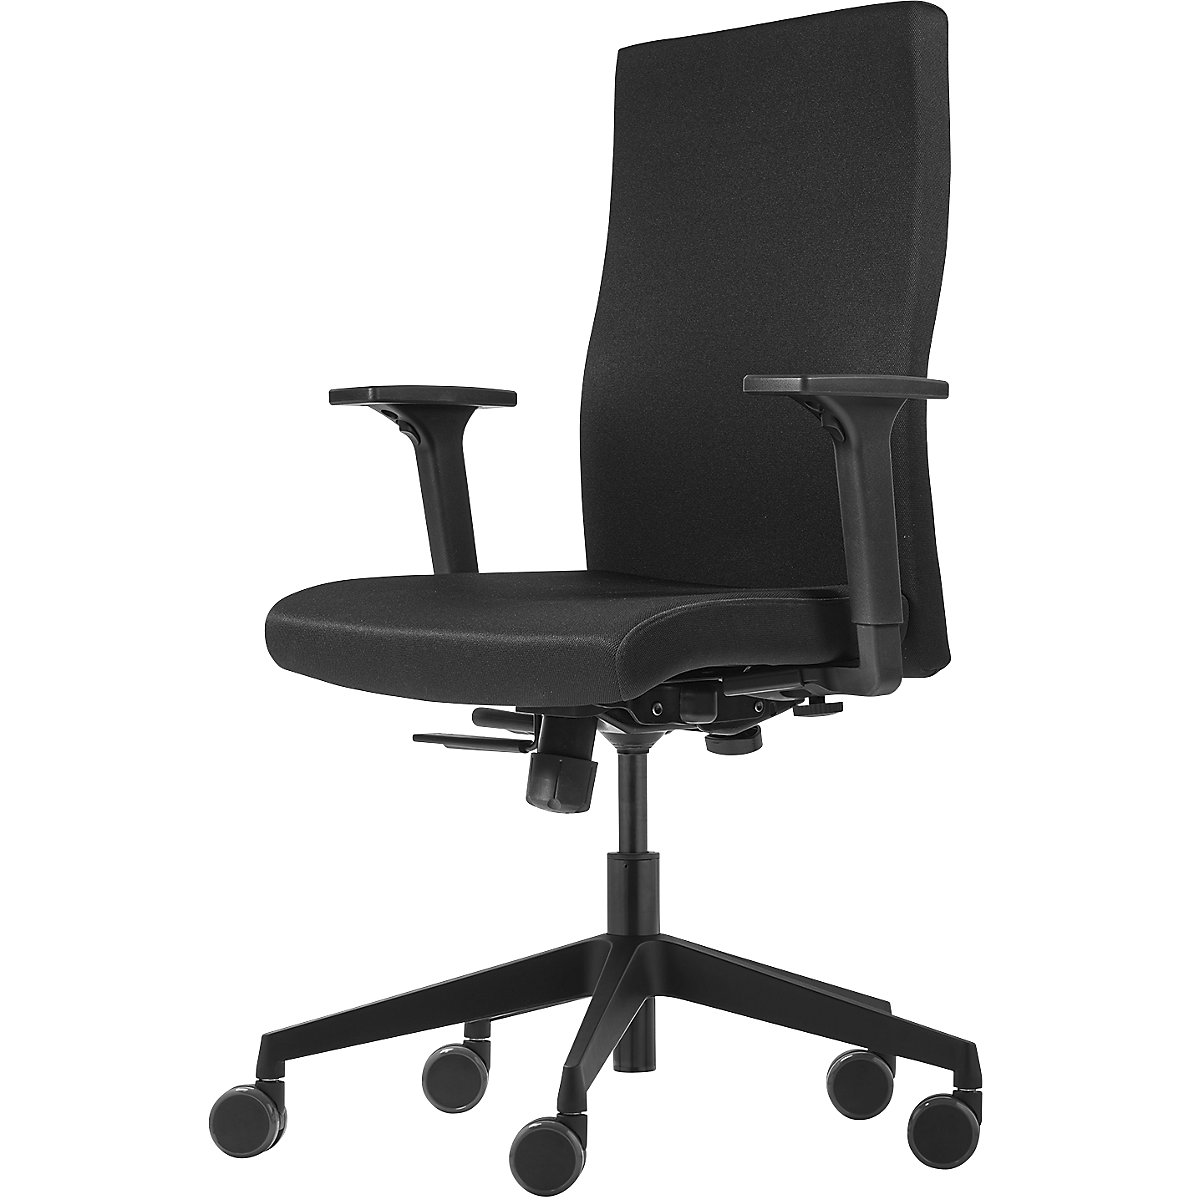 STRIKE COMFORT office swivel chair - TrendOffice